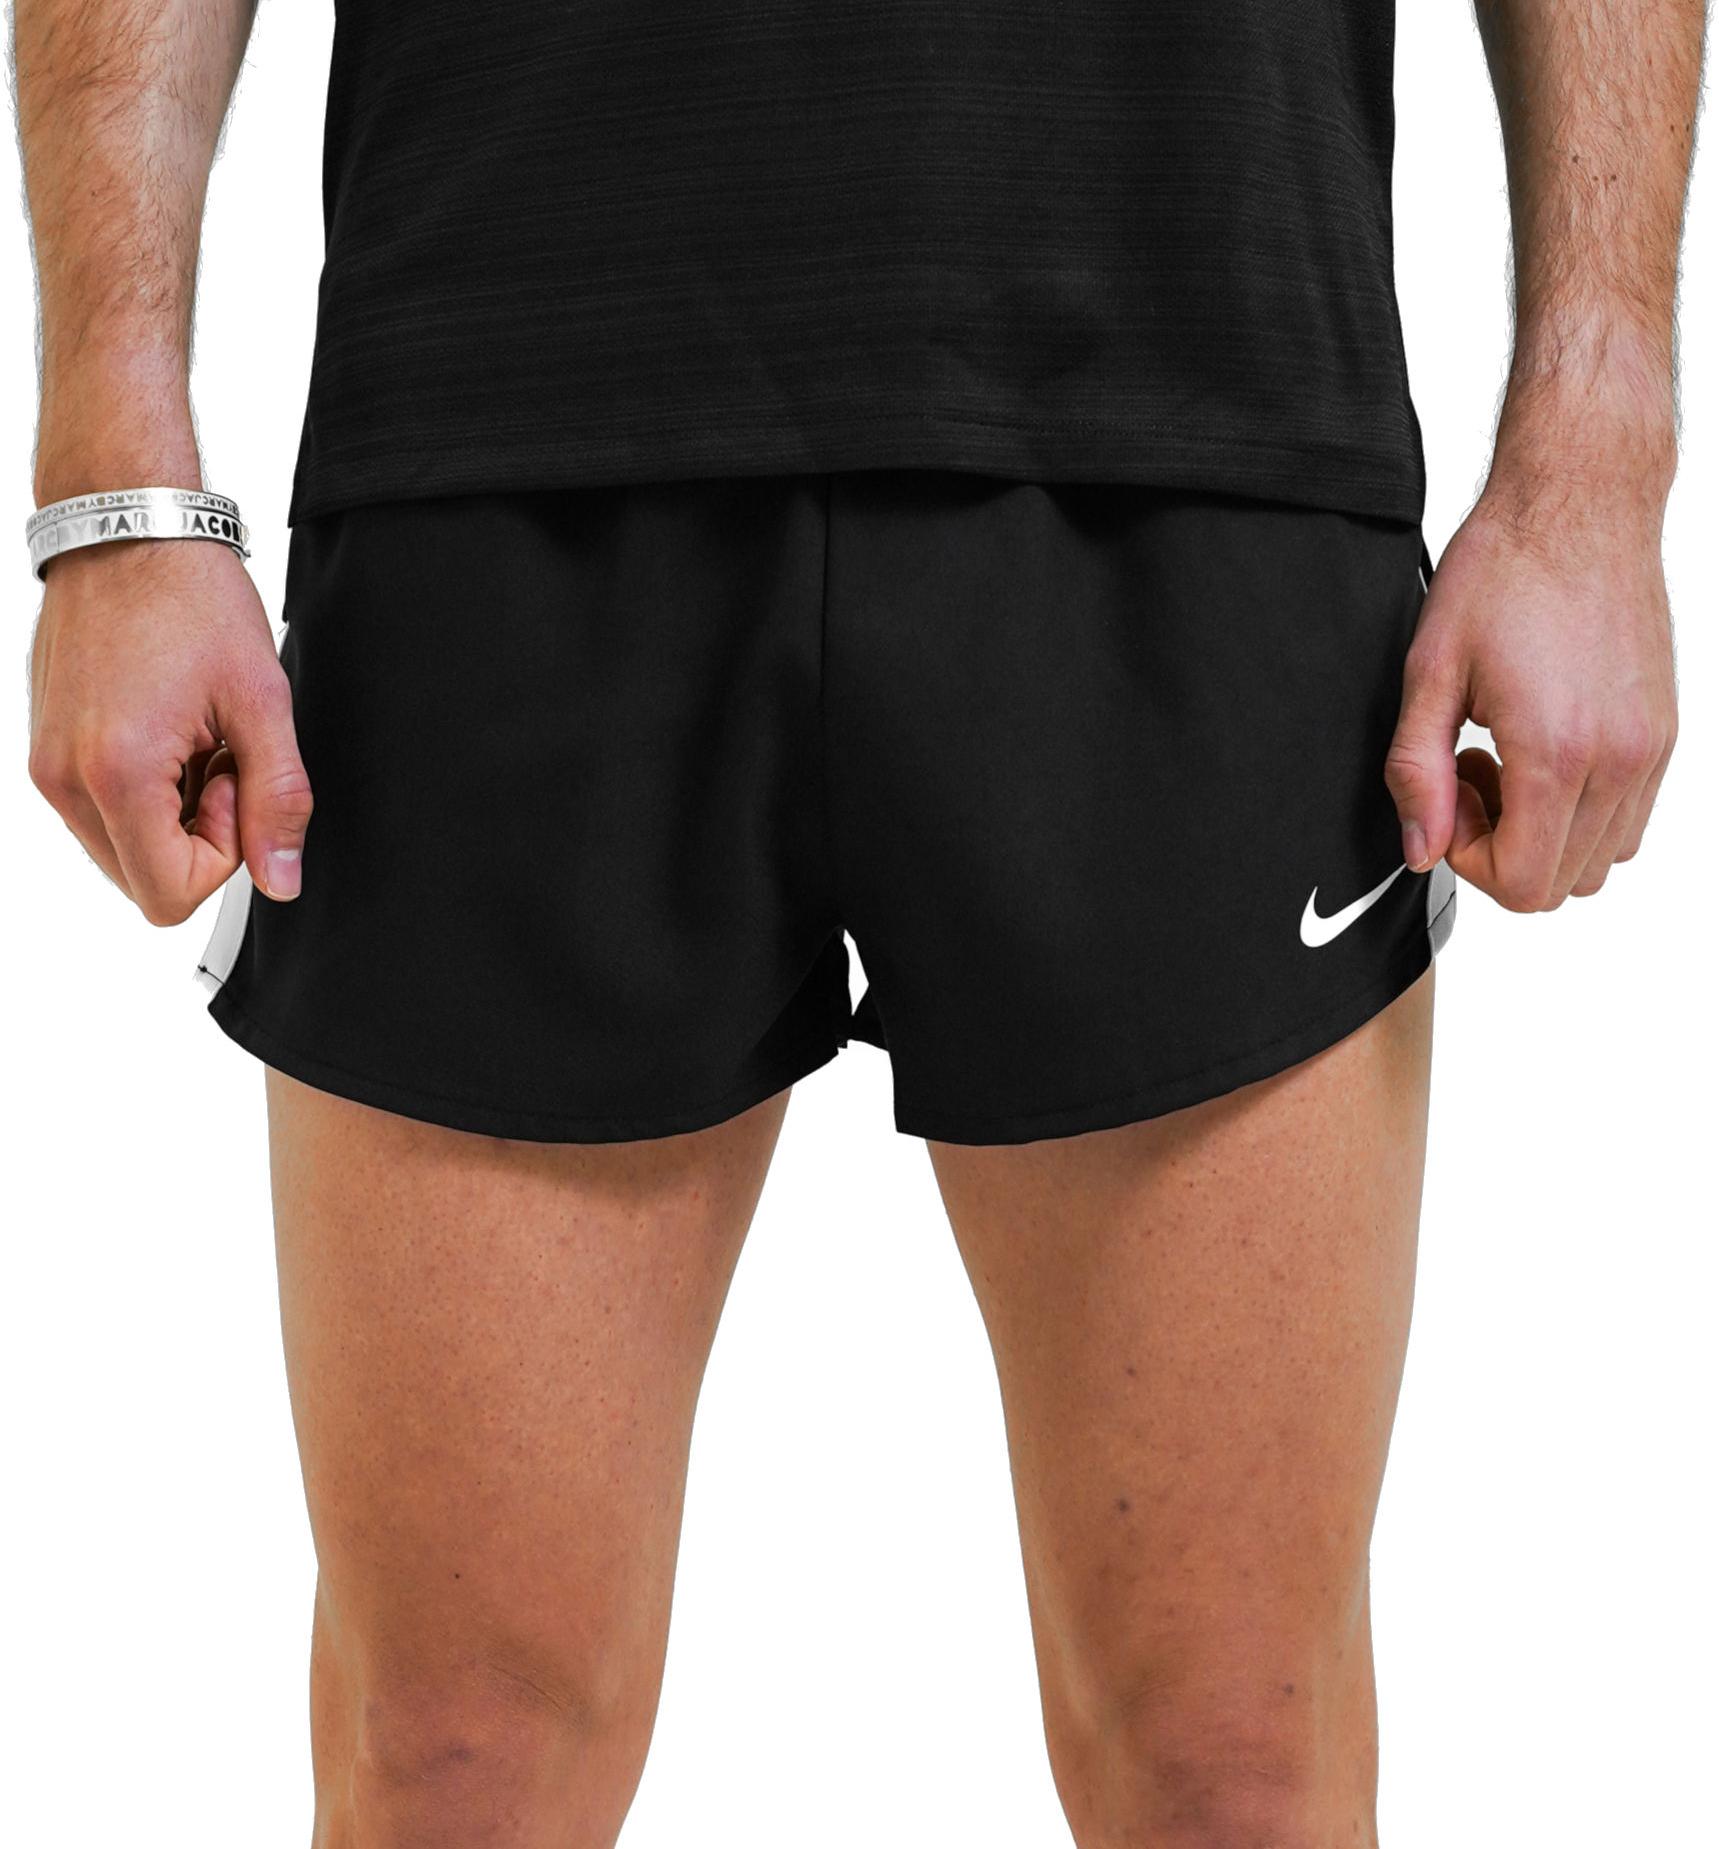 Pantalón corto Nike men Stock Fast 2 inch Short